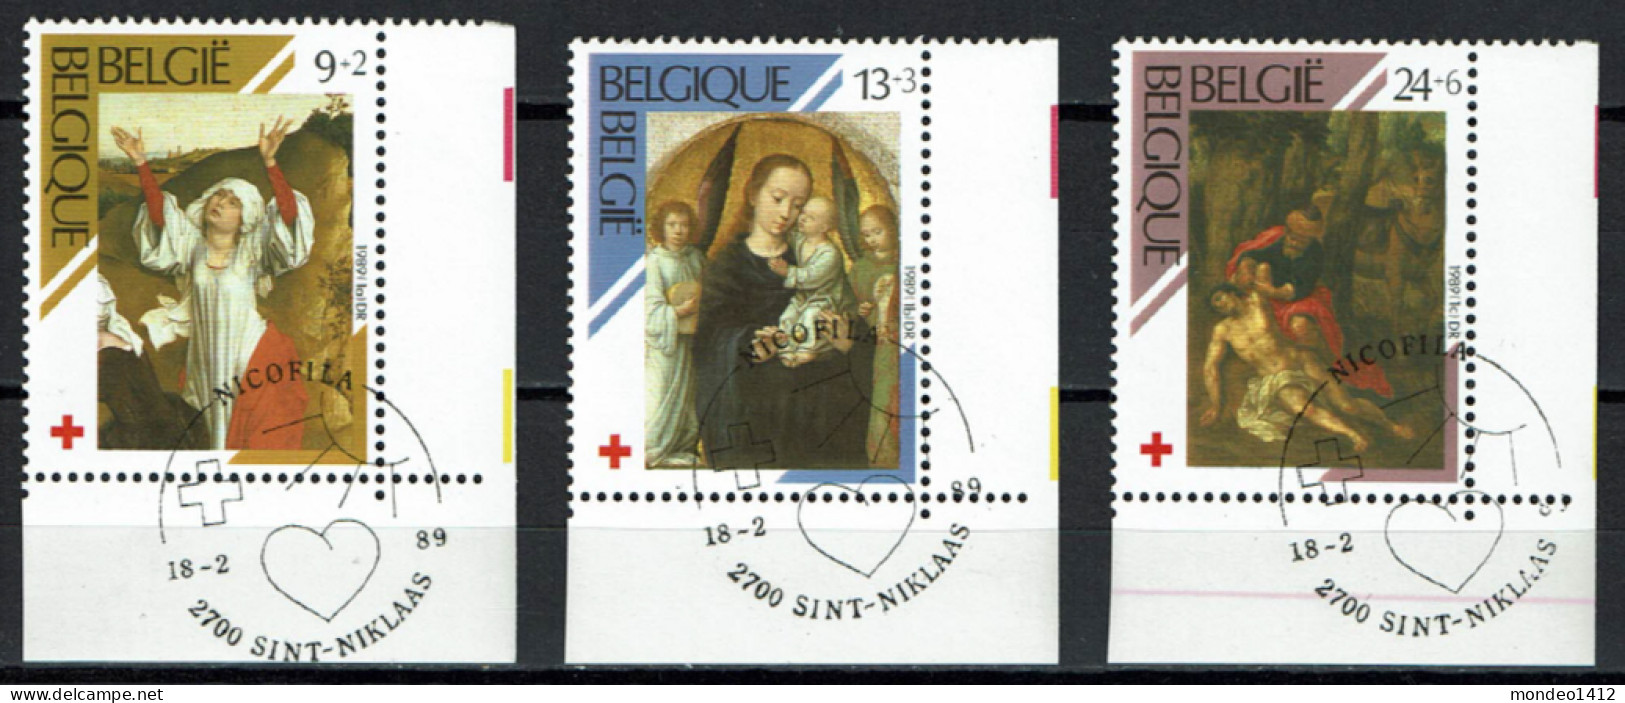 België 1989 OBP 2312/14 - Croix Rouge, Red Cross - Schilderij, Painting, Tableau - Bonne Valeur - Gebraucht